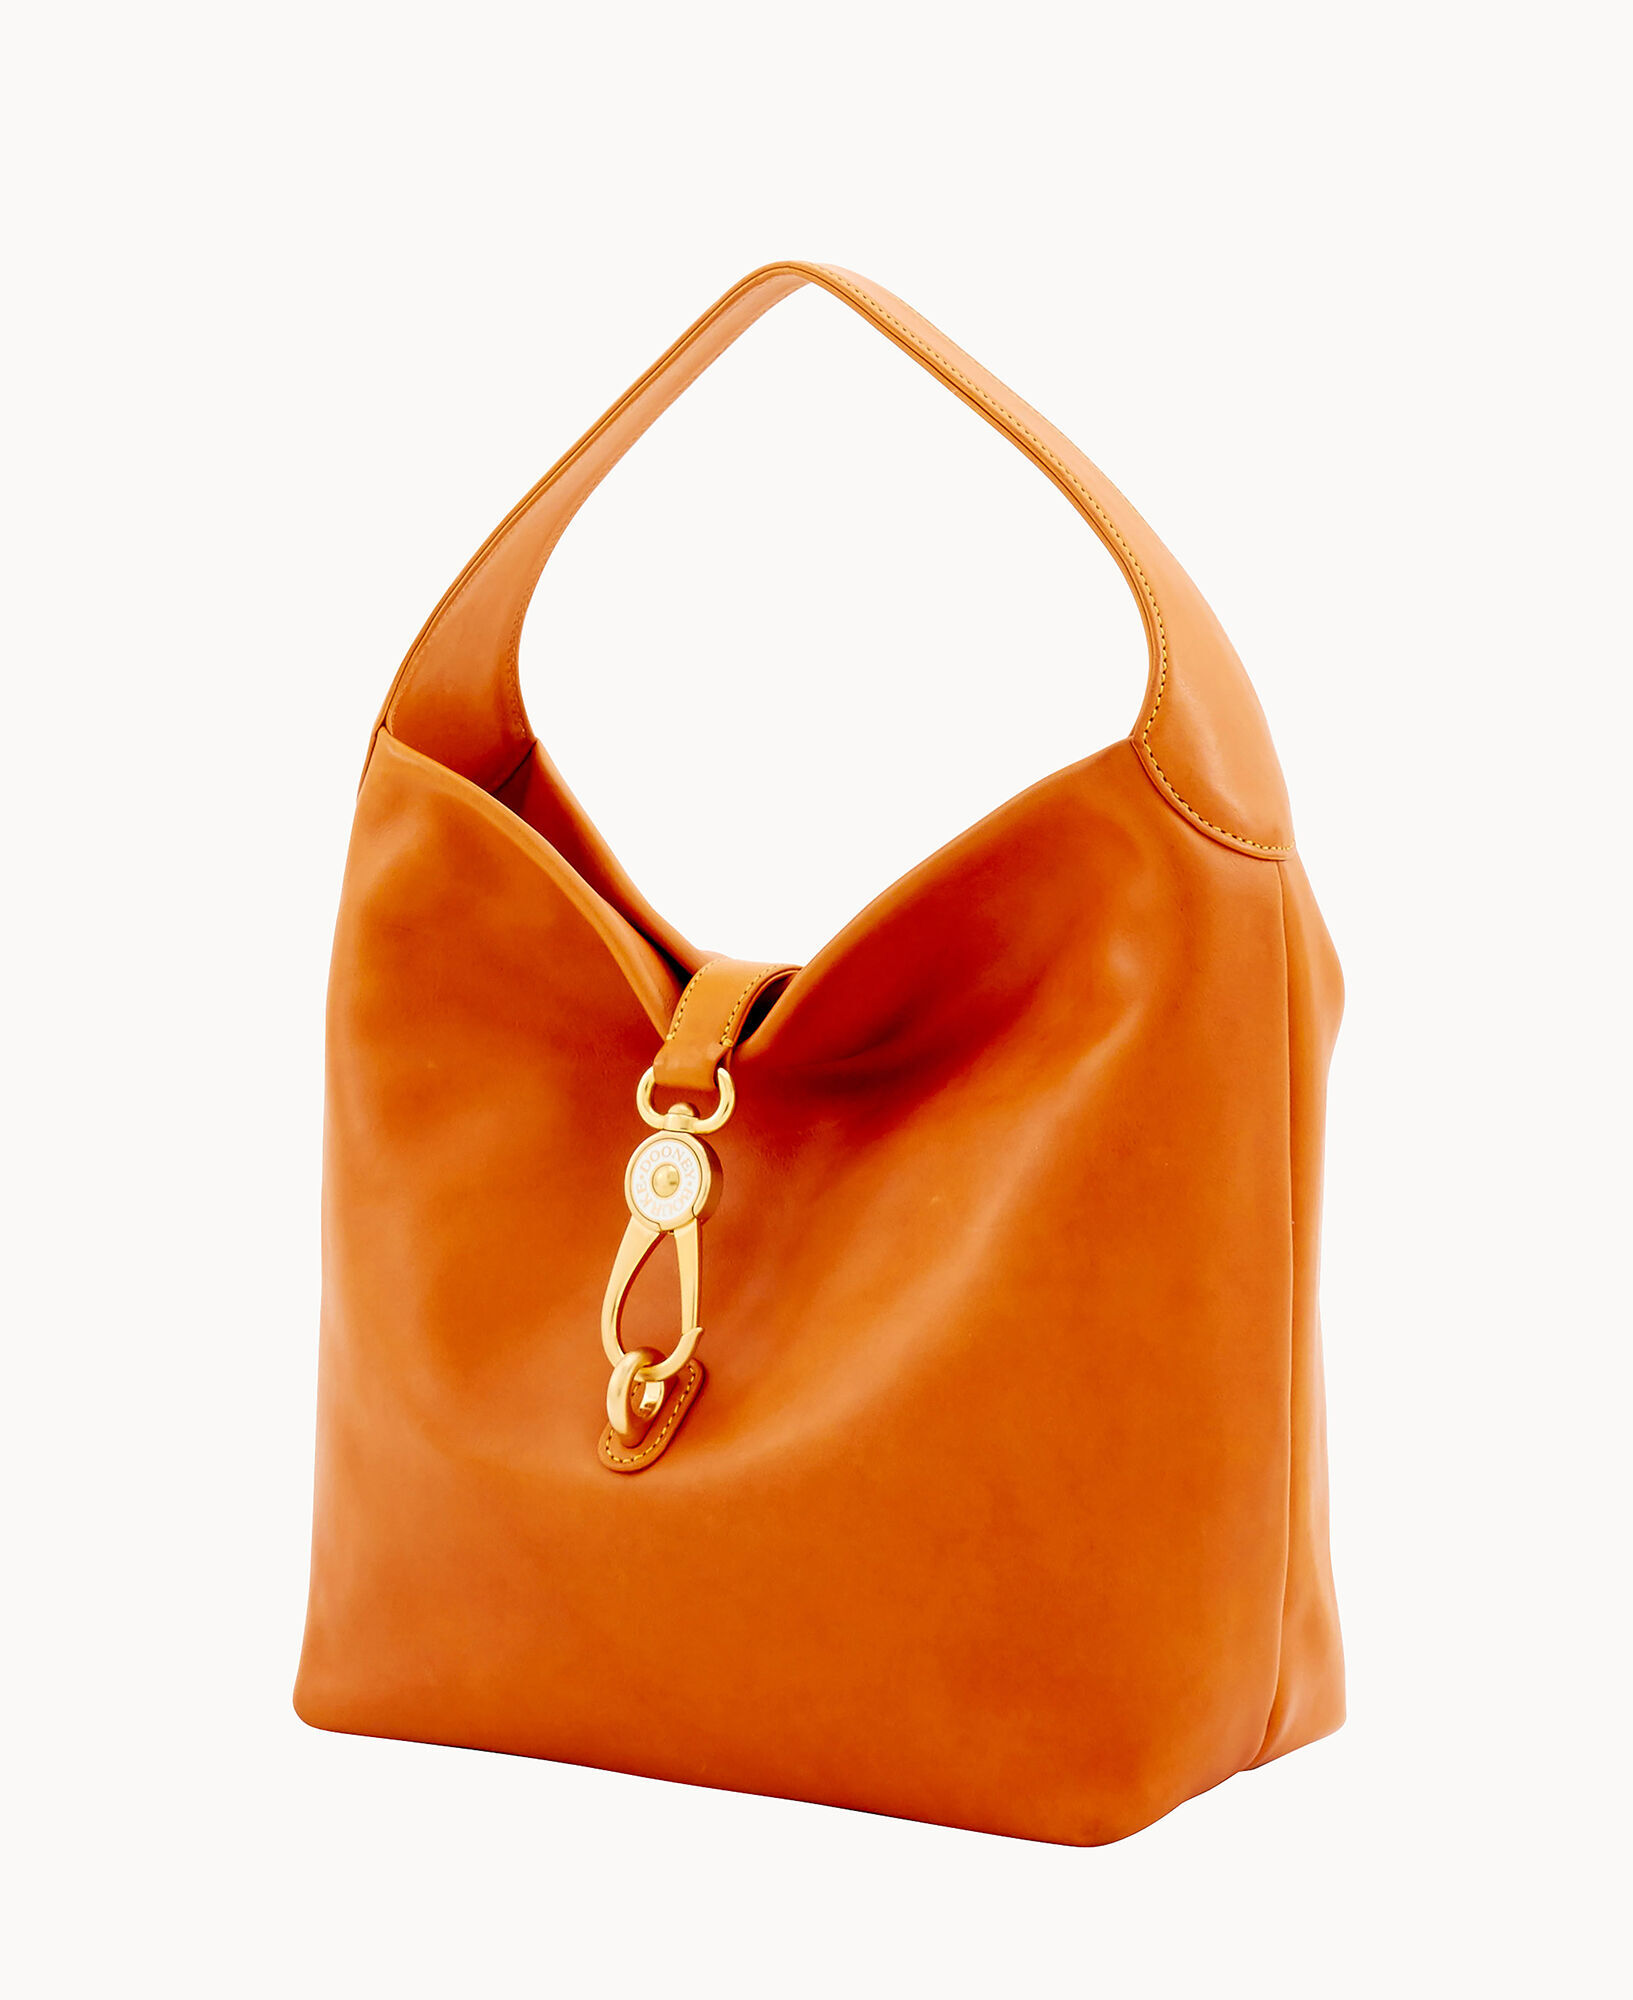 Dooney & Bourke Saffiano Leather Baguette Bag 